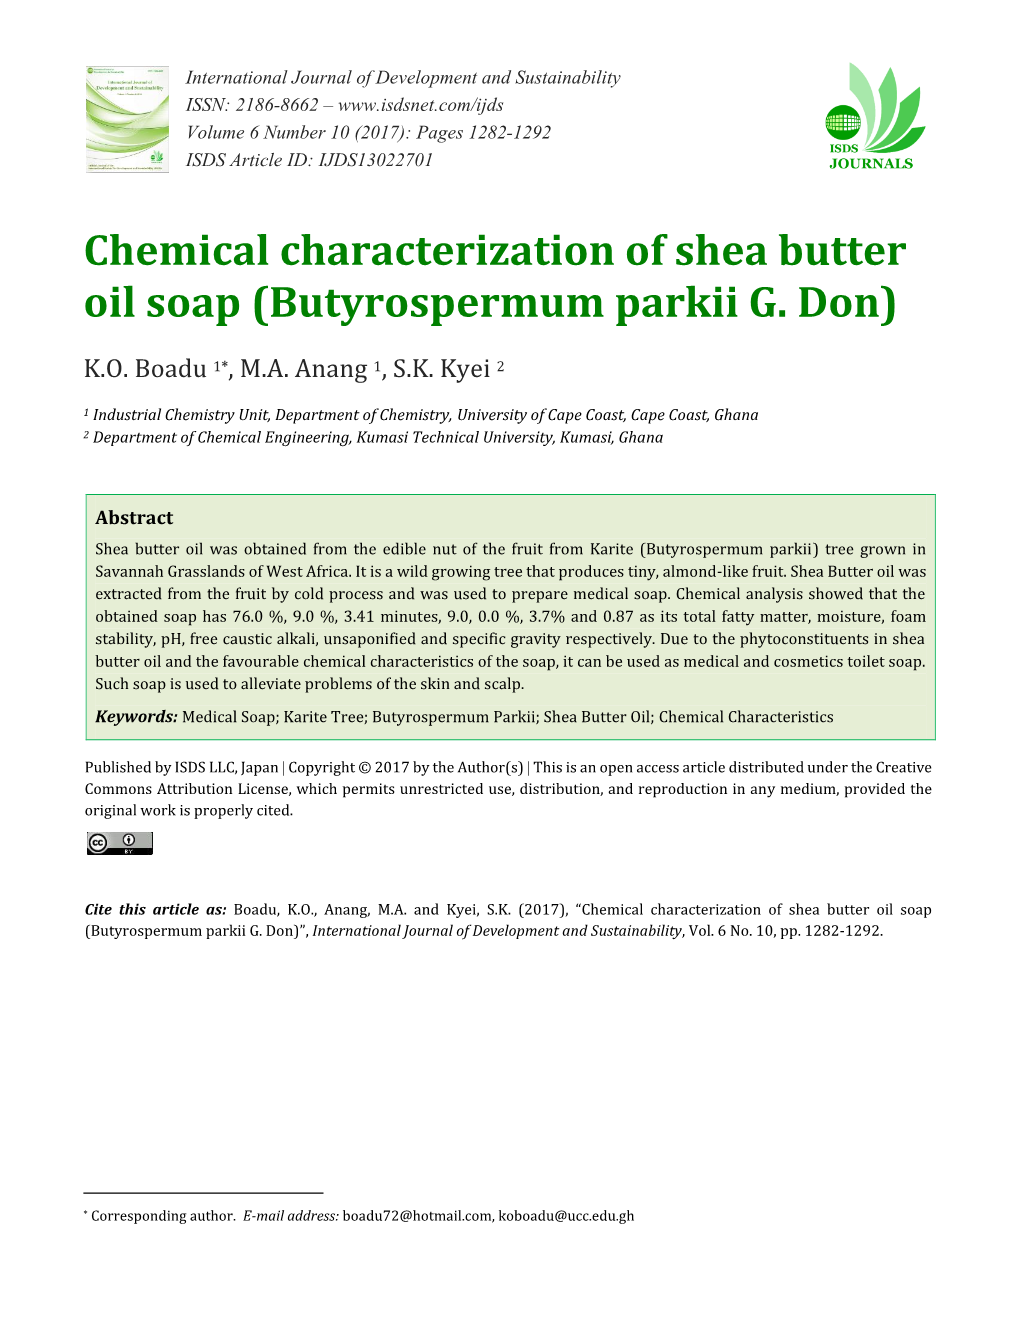 Chemical Characterization of Shea Butter Oil Soap (Butyrospermum Parkii G